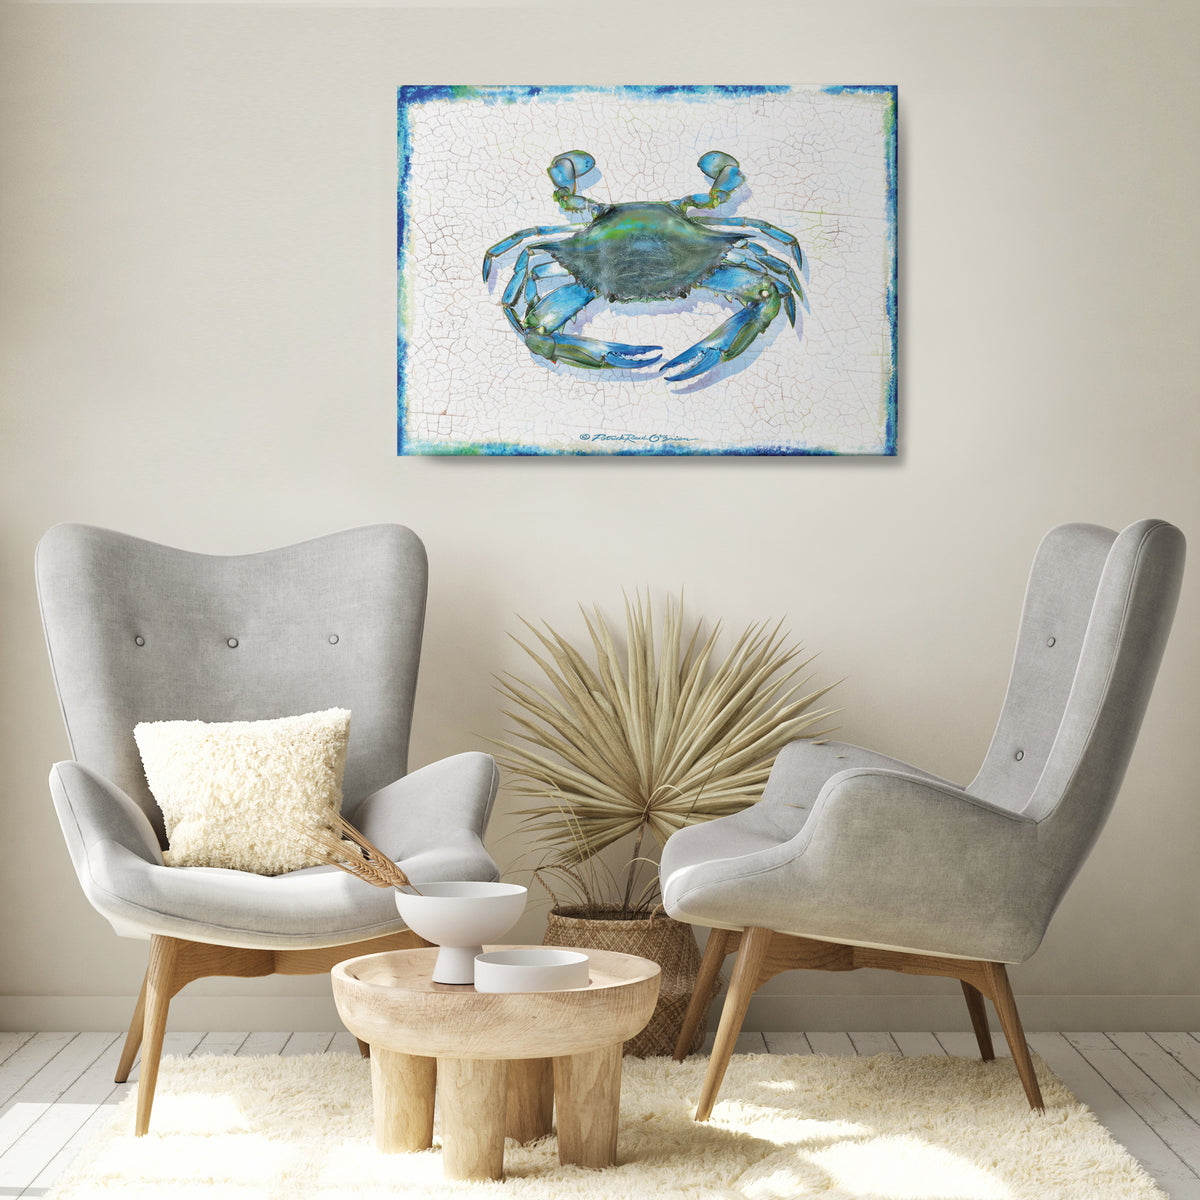 Blue Crab by Gavin Erwin - Leeward Look